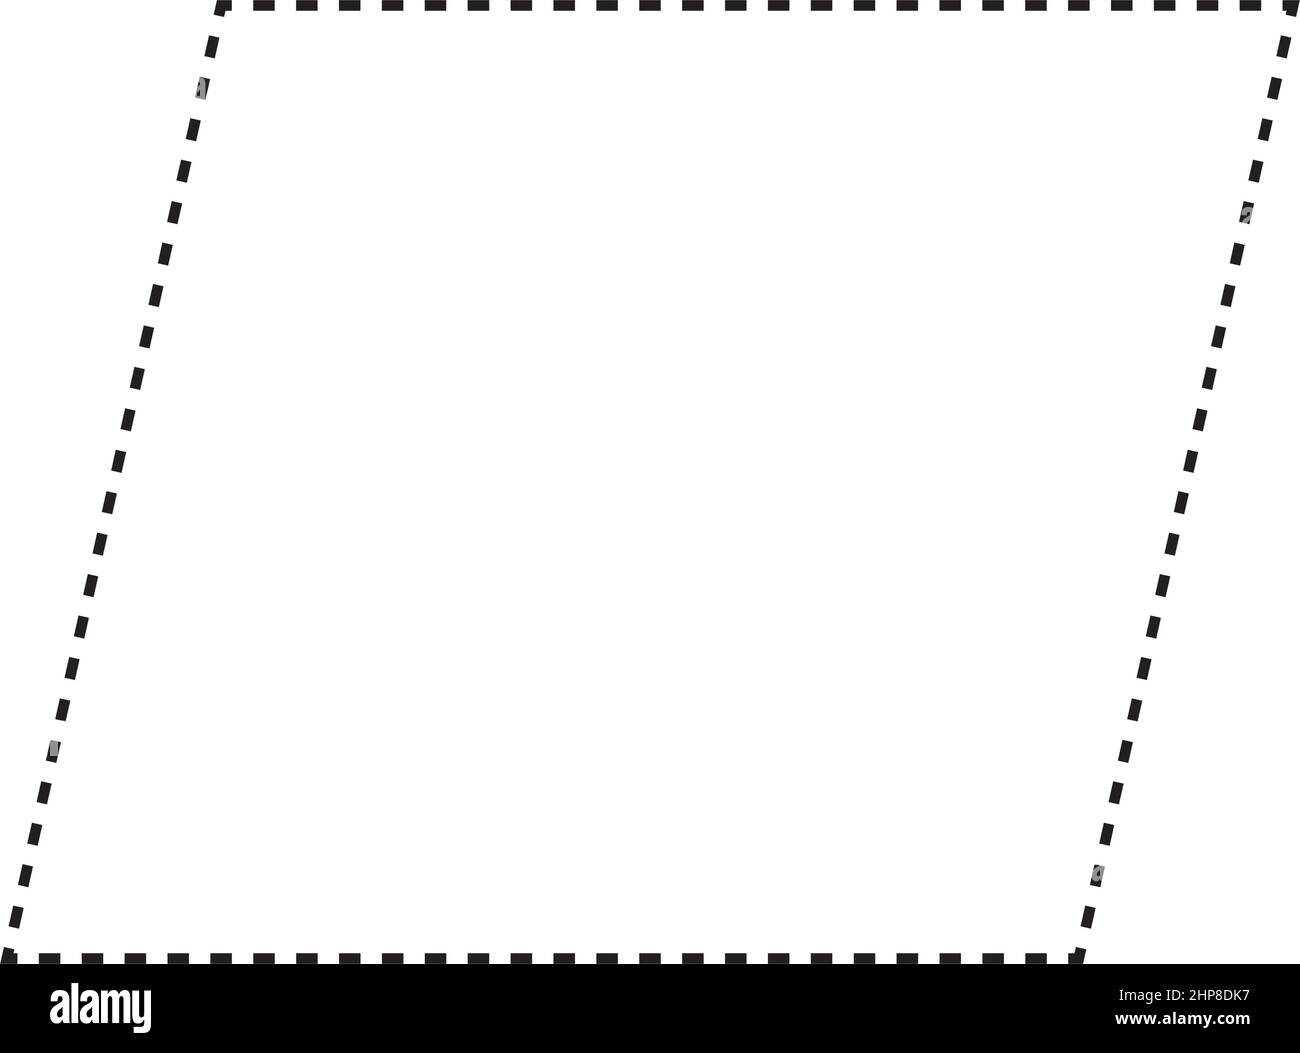 Parallelogrammform gestricheltes Symbol Vektor-Symbol für kreatives Grafikdesign ui-Element in einer Piktogramm-Illustration Stock Vektor